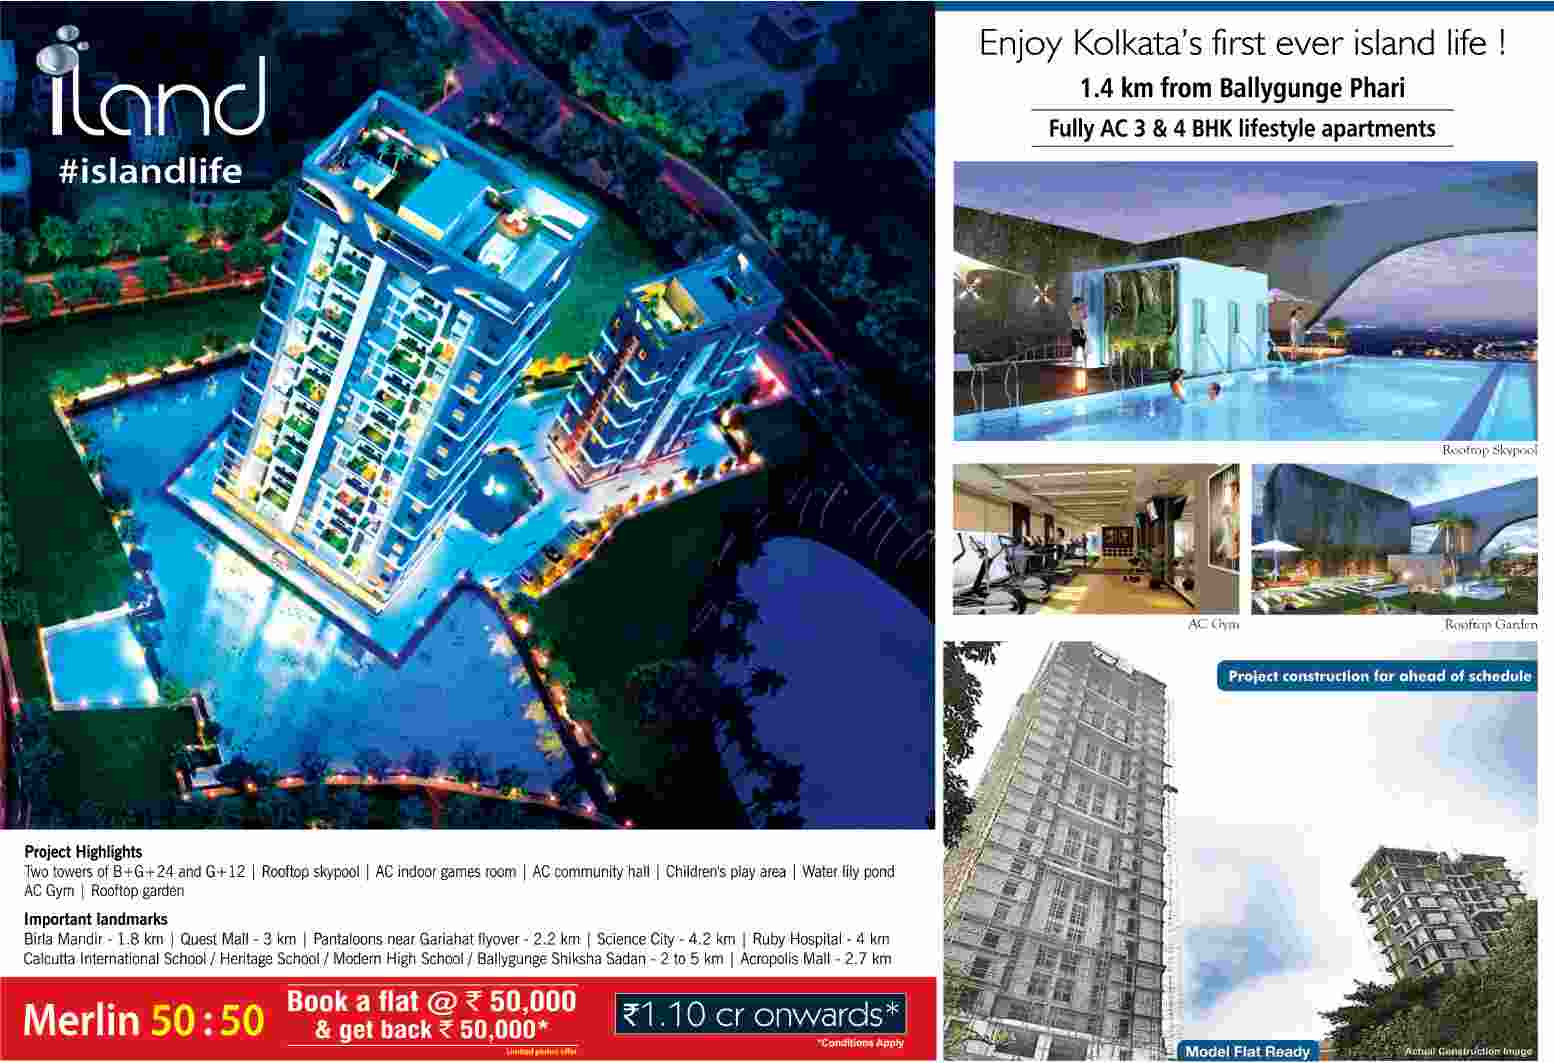 Enjoy Kolkata's first ever island life at PS Merlin iland Update